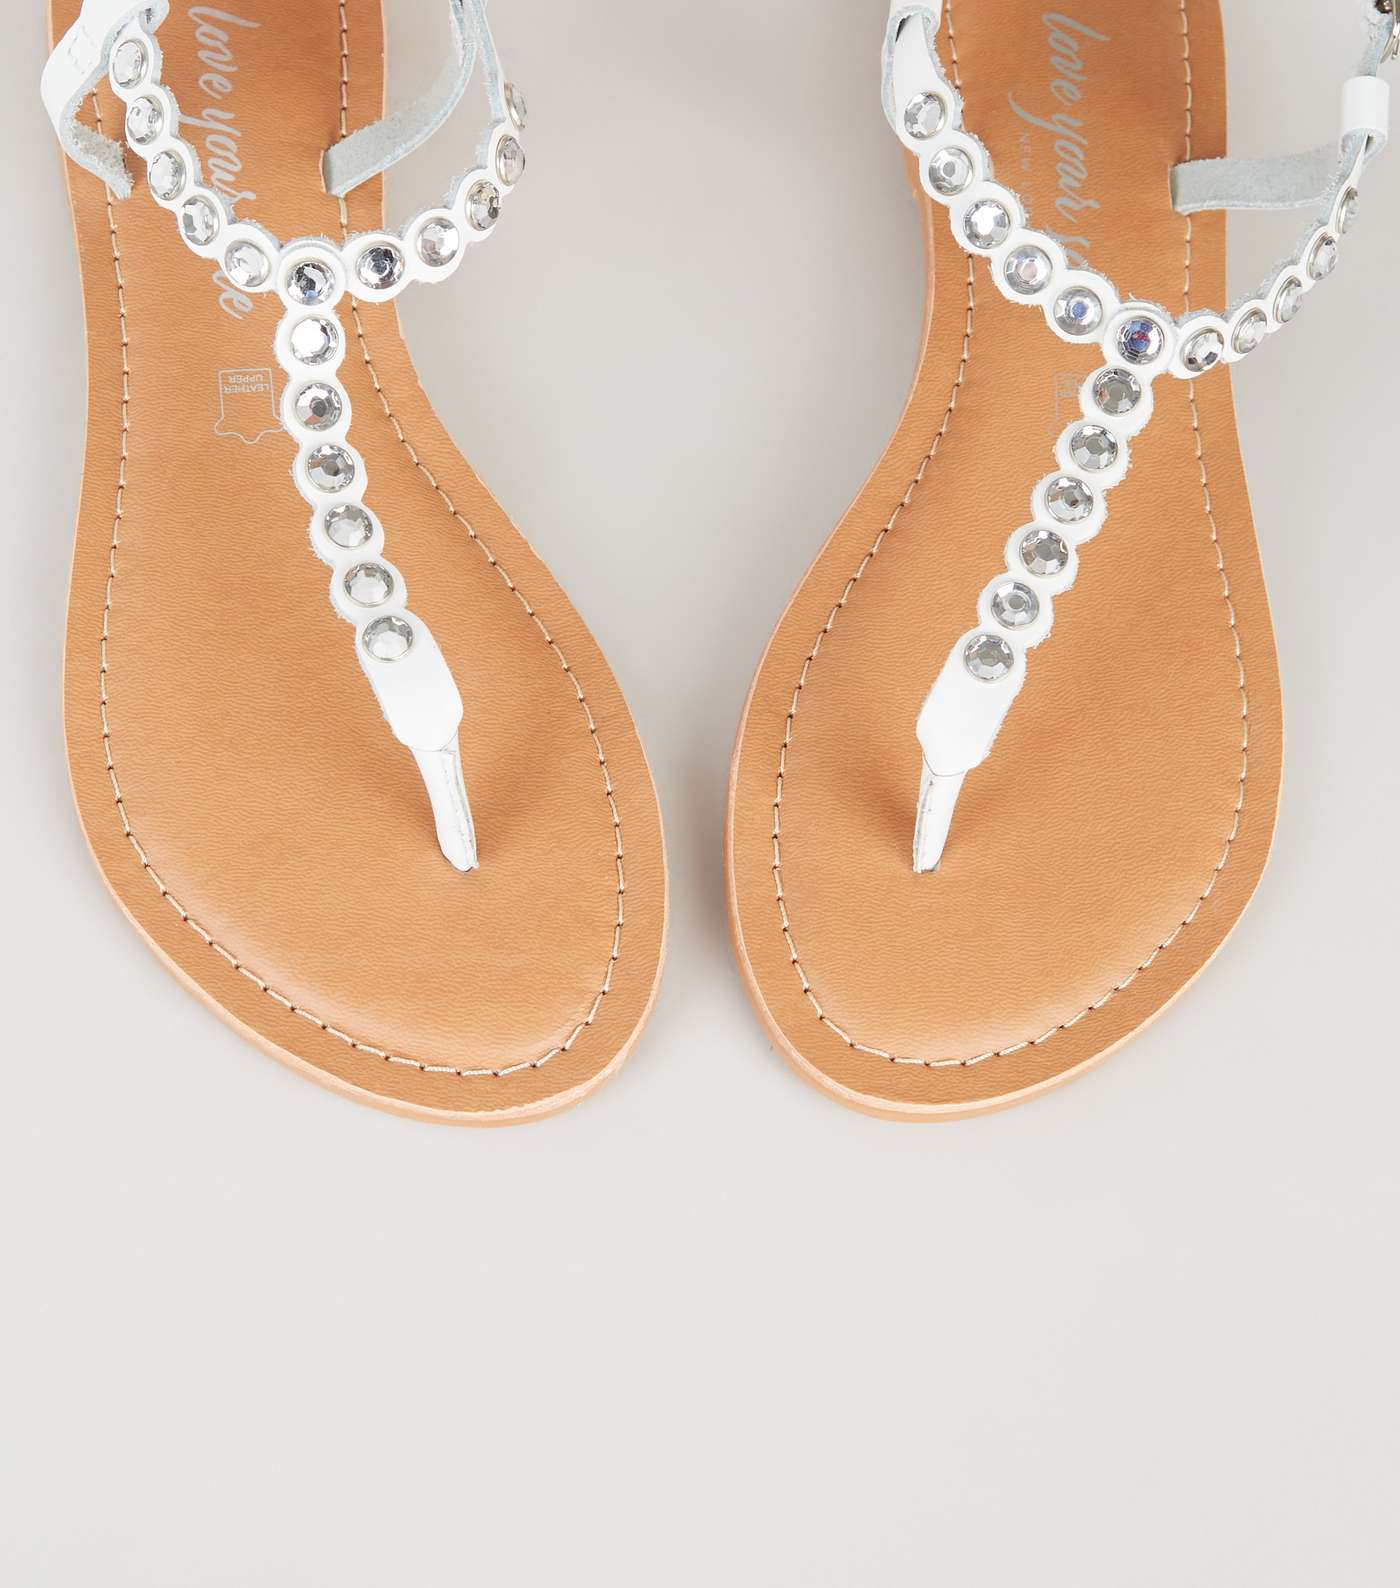 White Leather Gem Embellished Flat Sandals Image 4